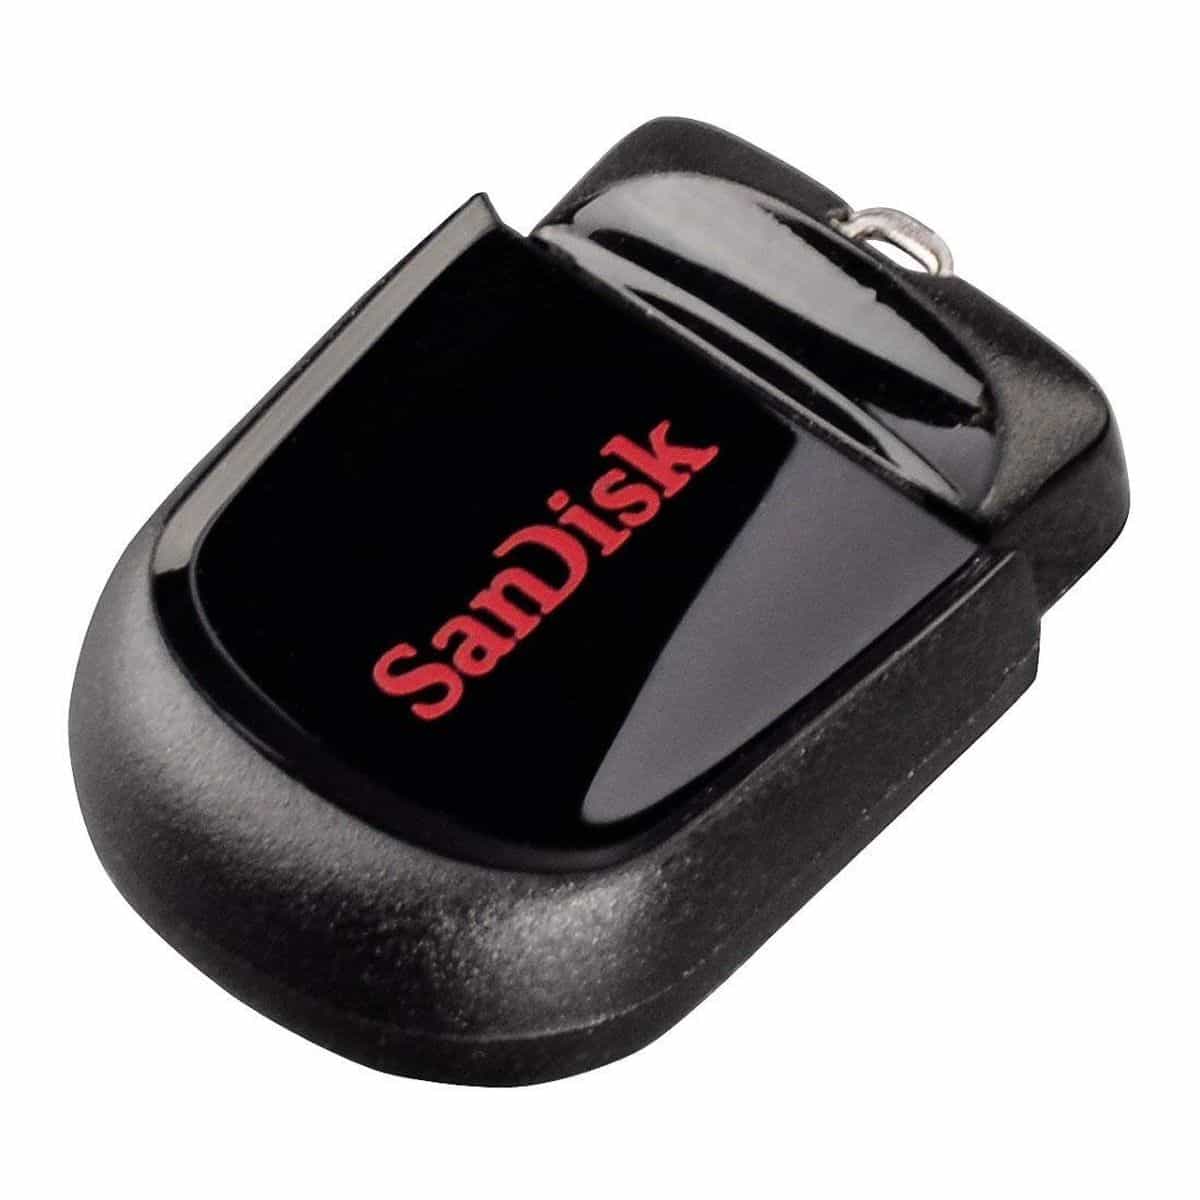 SanDisk Cruzer USB | Get These Tech Gadgets Via Amazon Prime